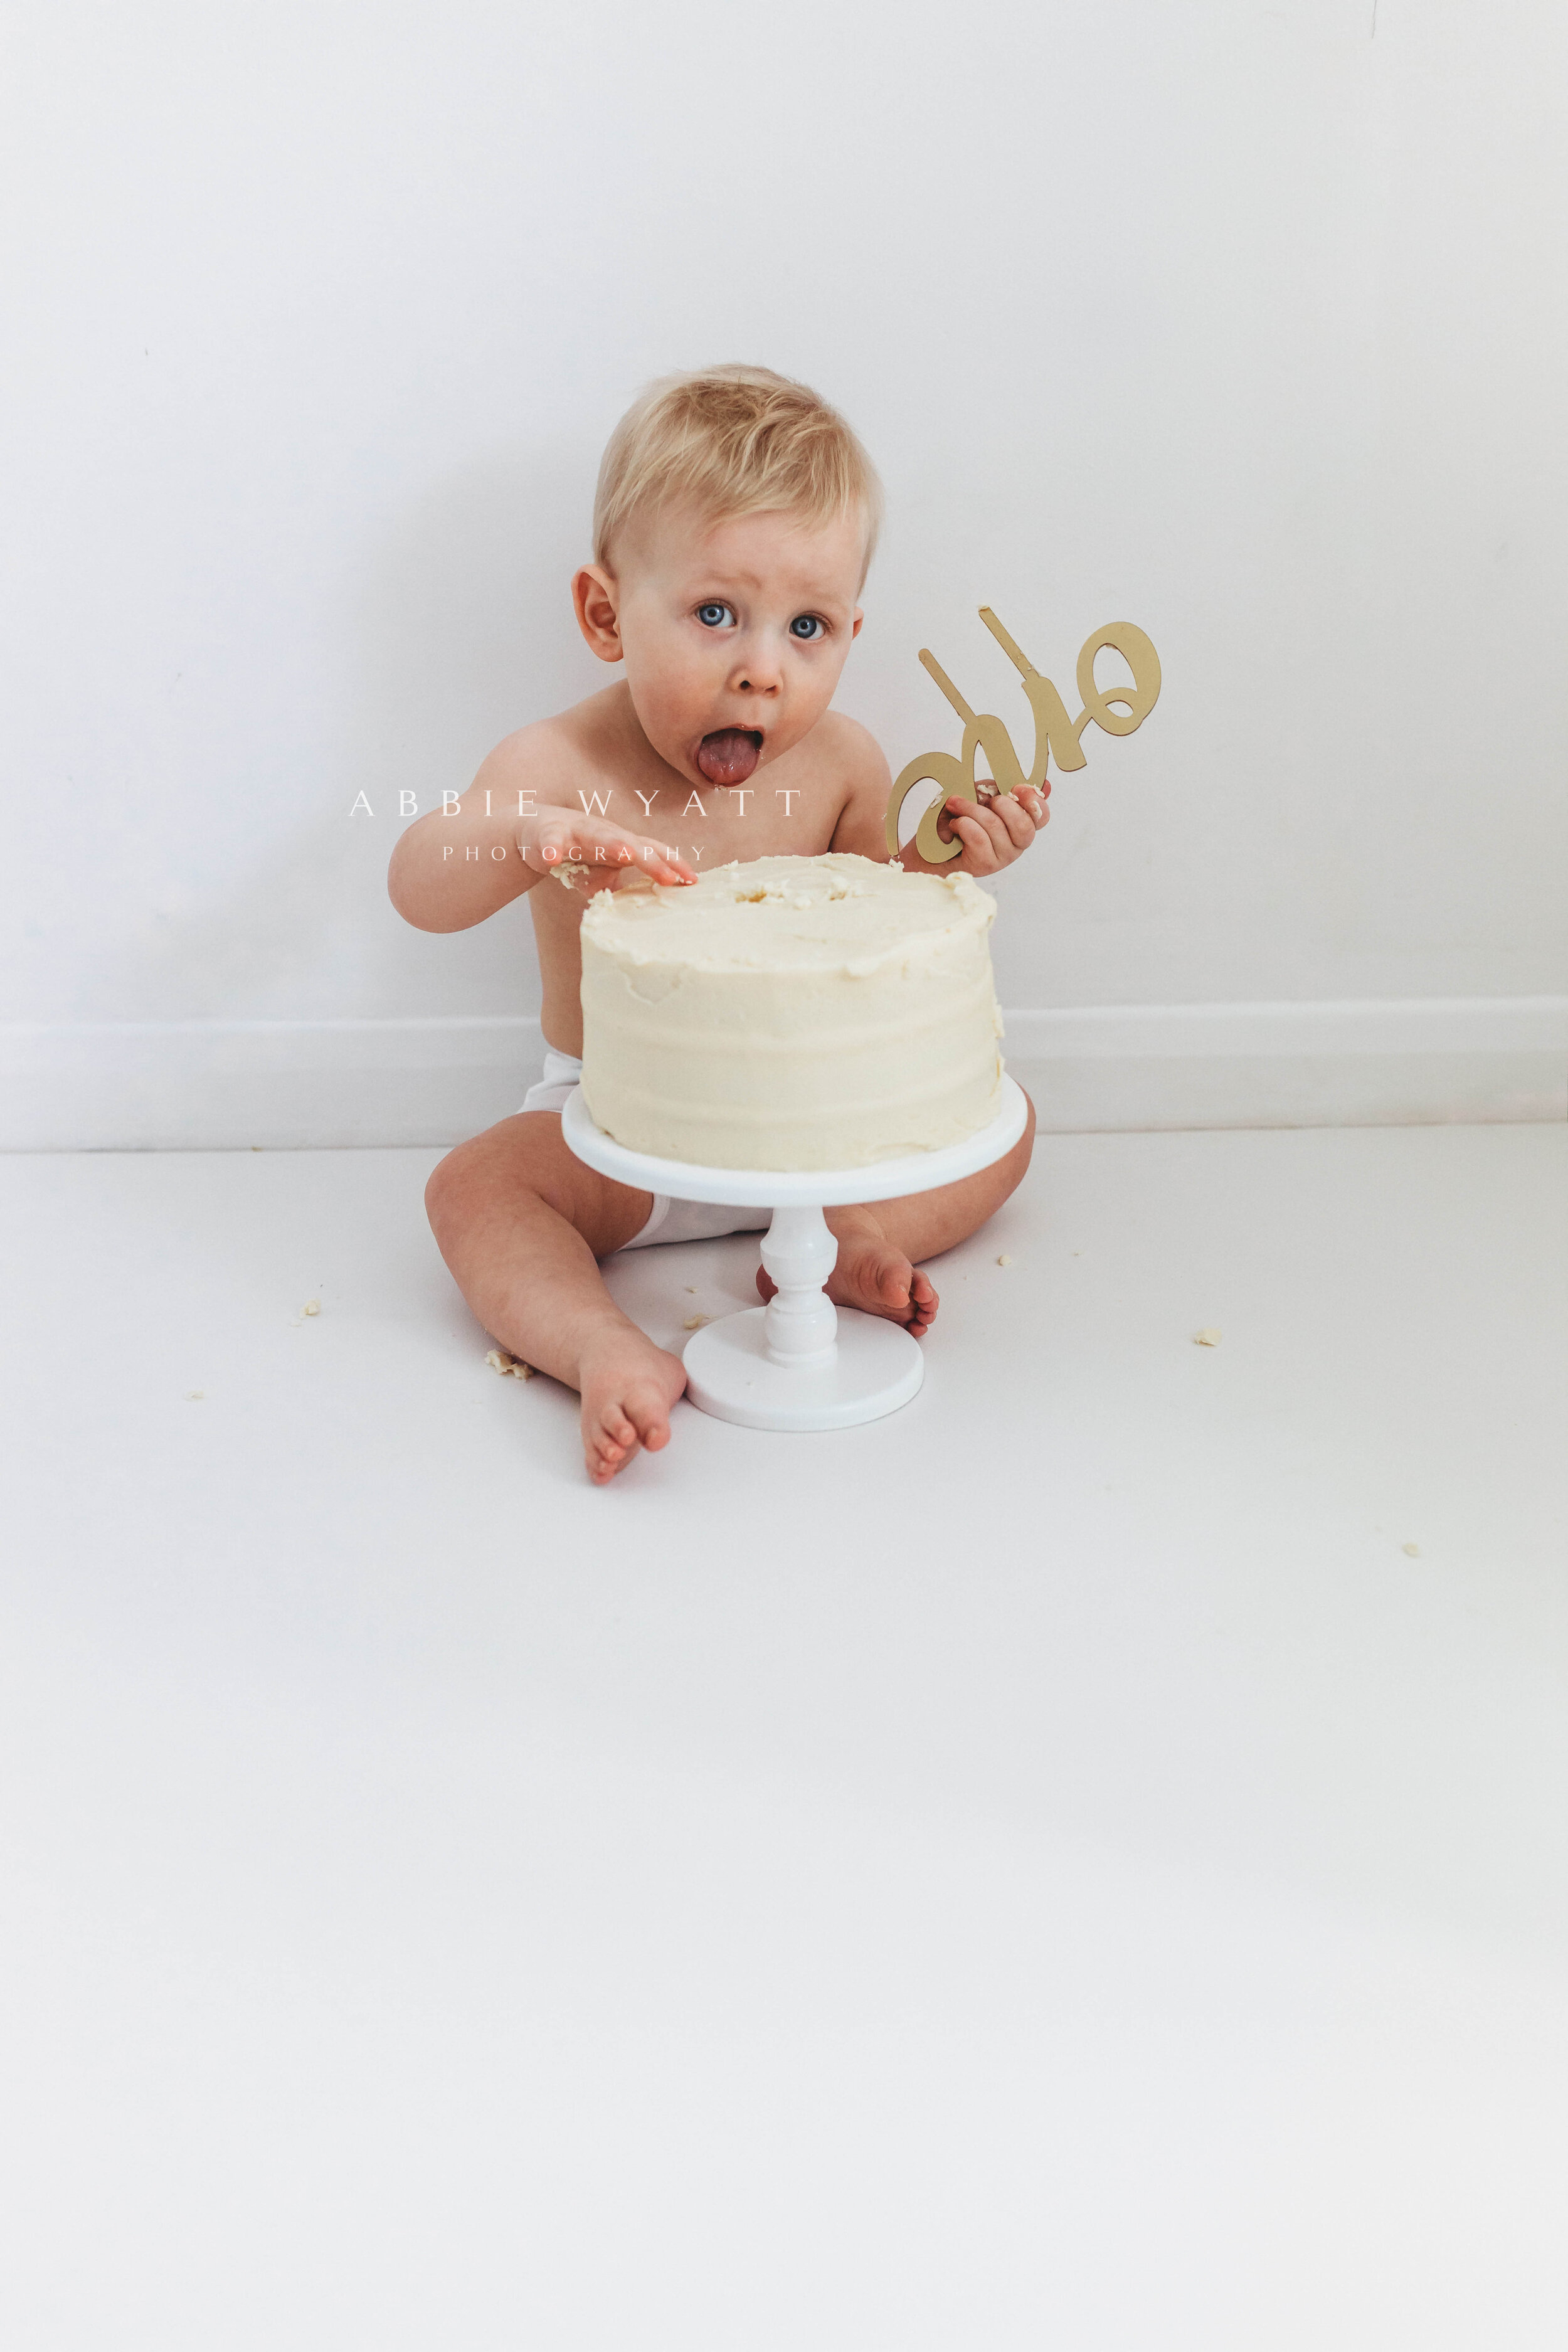 Abbie Wyatt Photography - Newborn, Baby &amp; Cake Smash Photographer. Based in Hemel Hempstead.